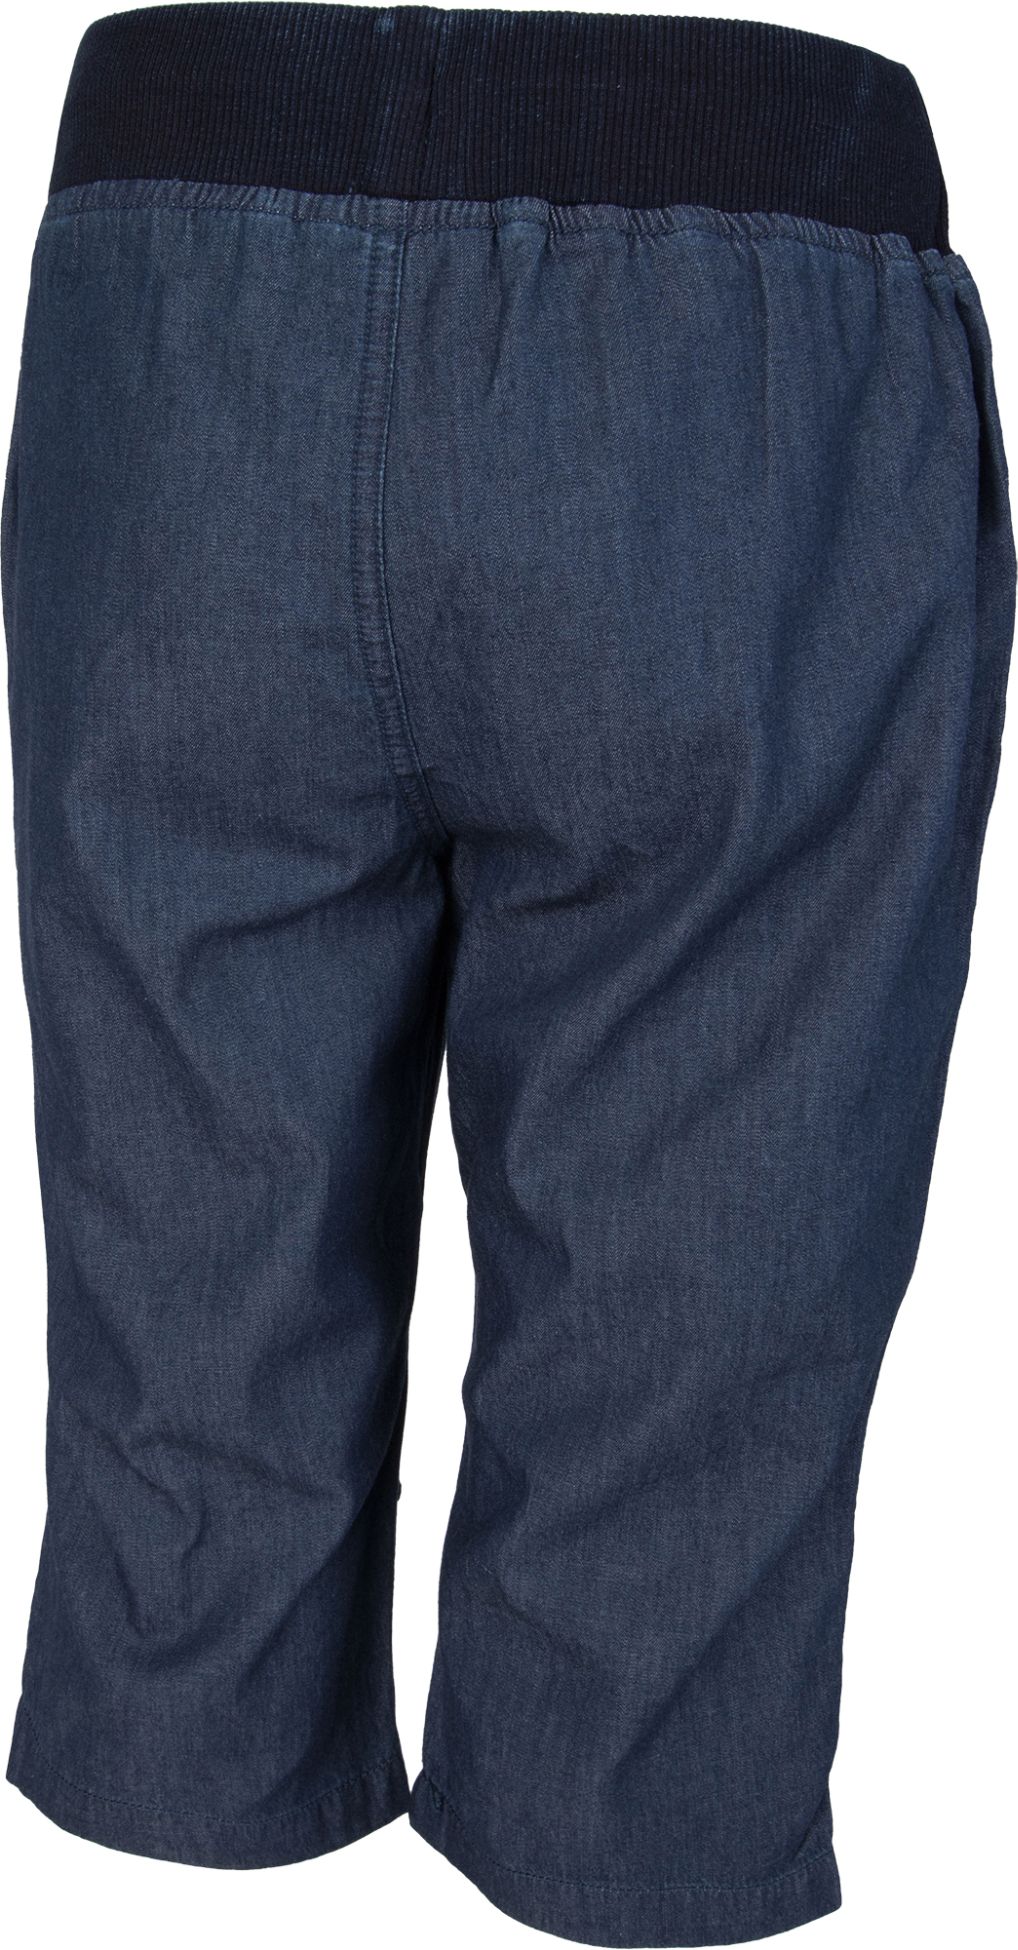 Boys’ three-quarter length pants